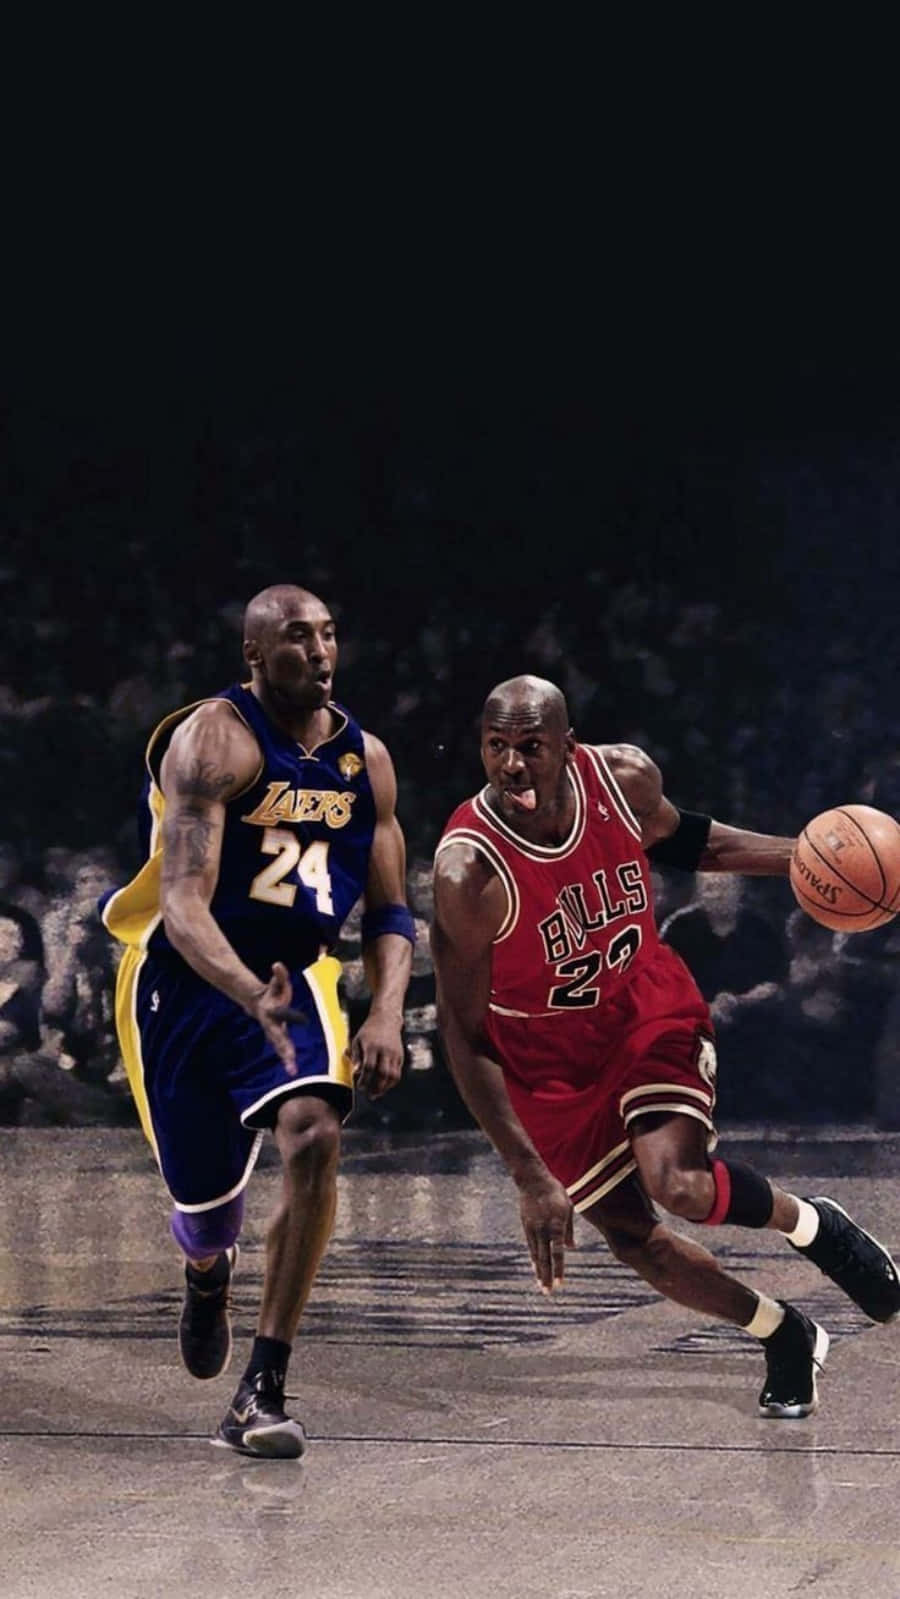 Professional Basketball Players Kobe Bryant And Michael Jordan Illustration Wallpaper